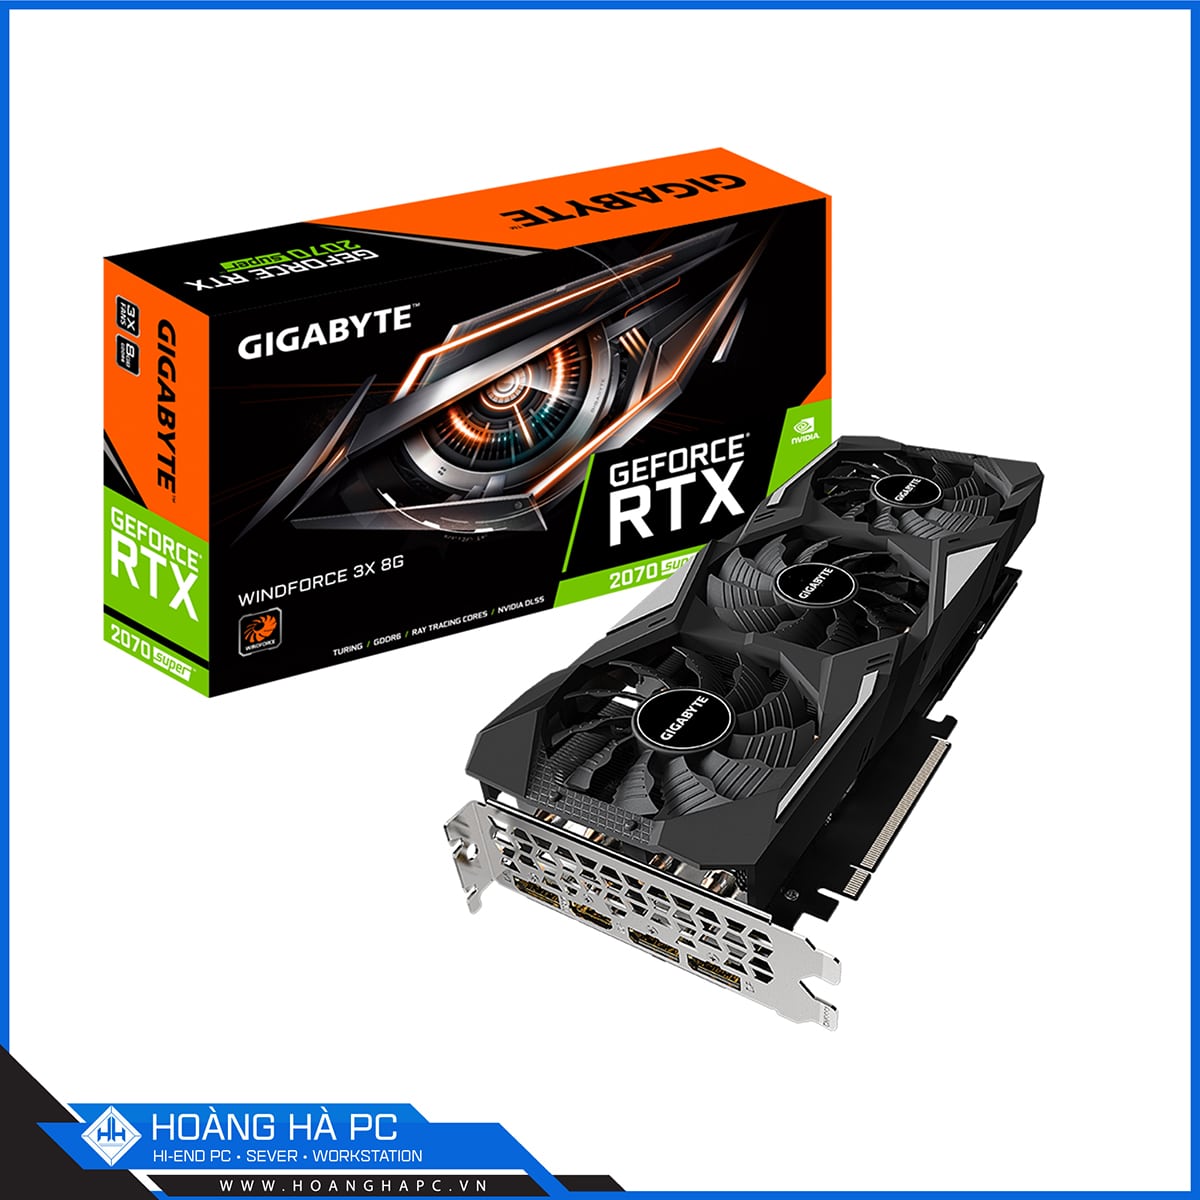 Gigabyte GeForce RTX 2070 SUPER WINDFORCE 3X